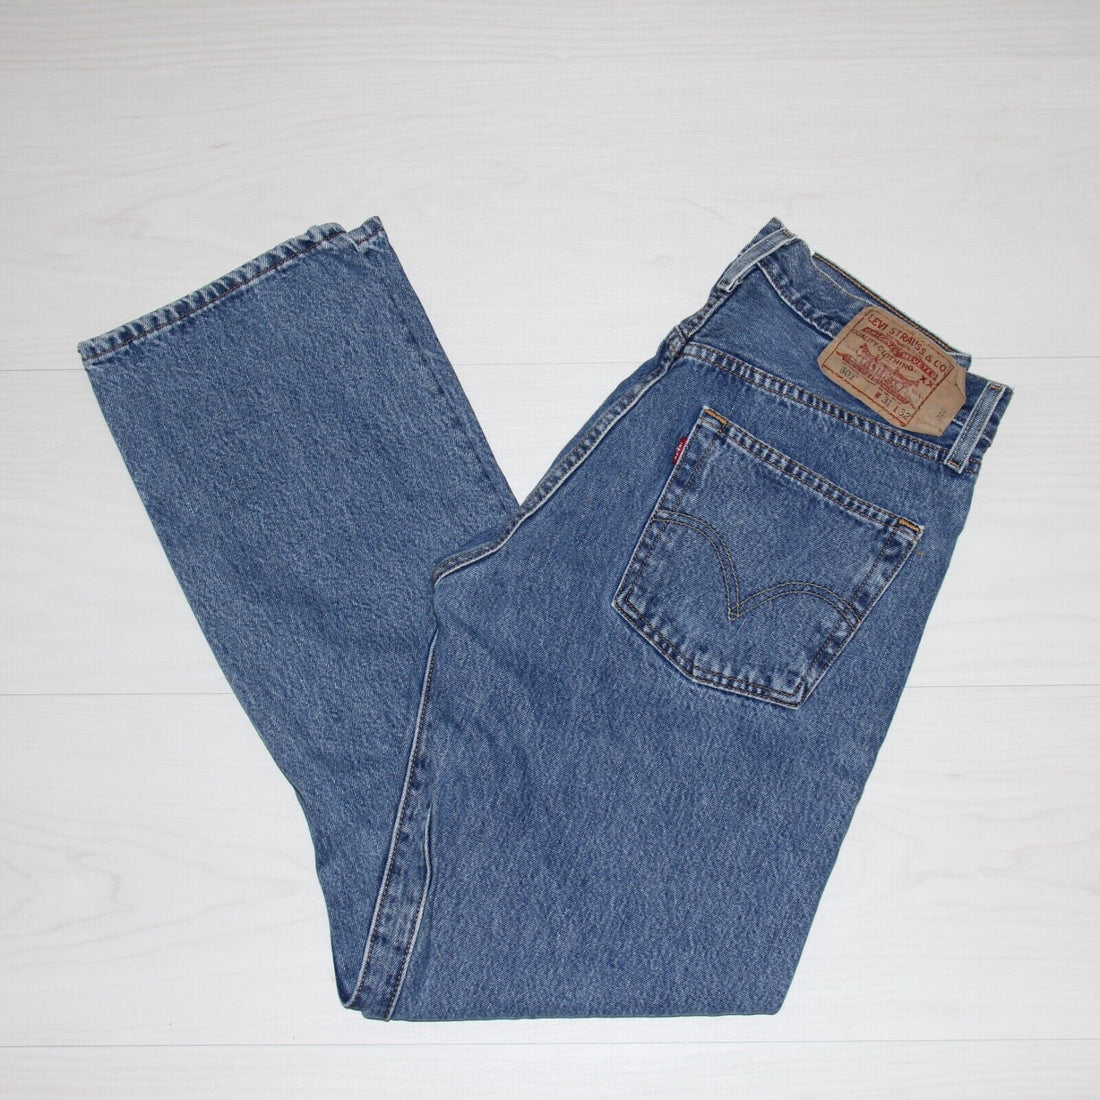 Vintage Levi Strauss & Co 501-0193 Denim Jeans Size 31